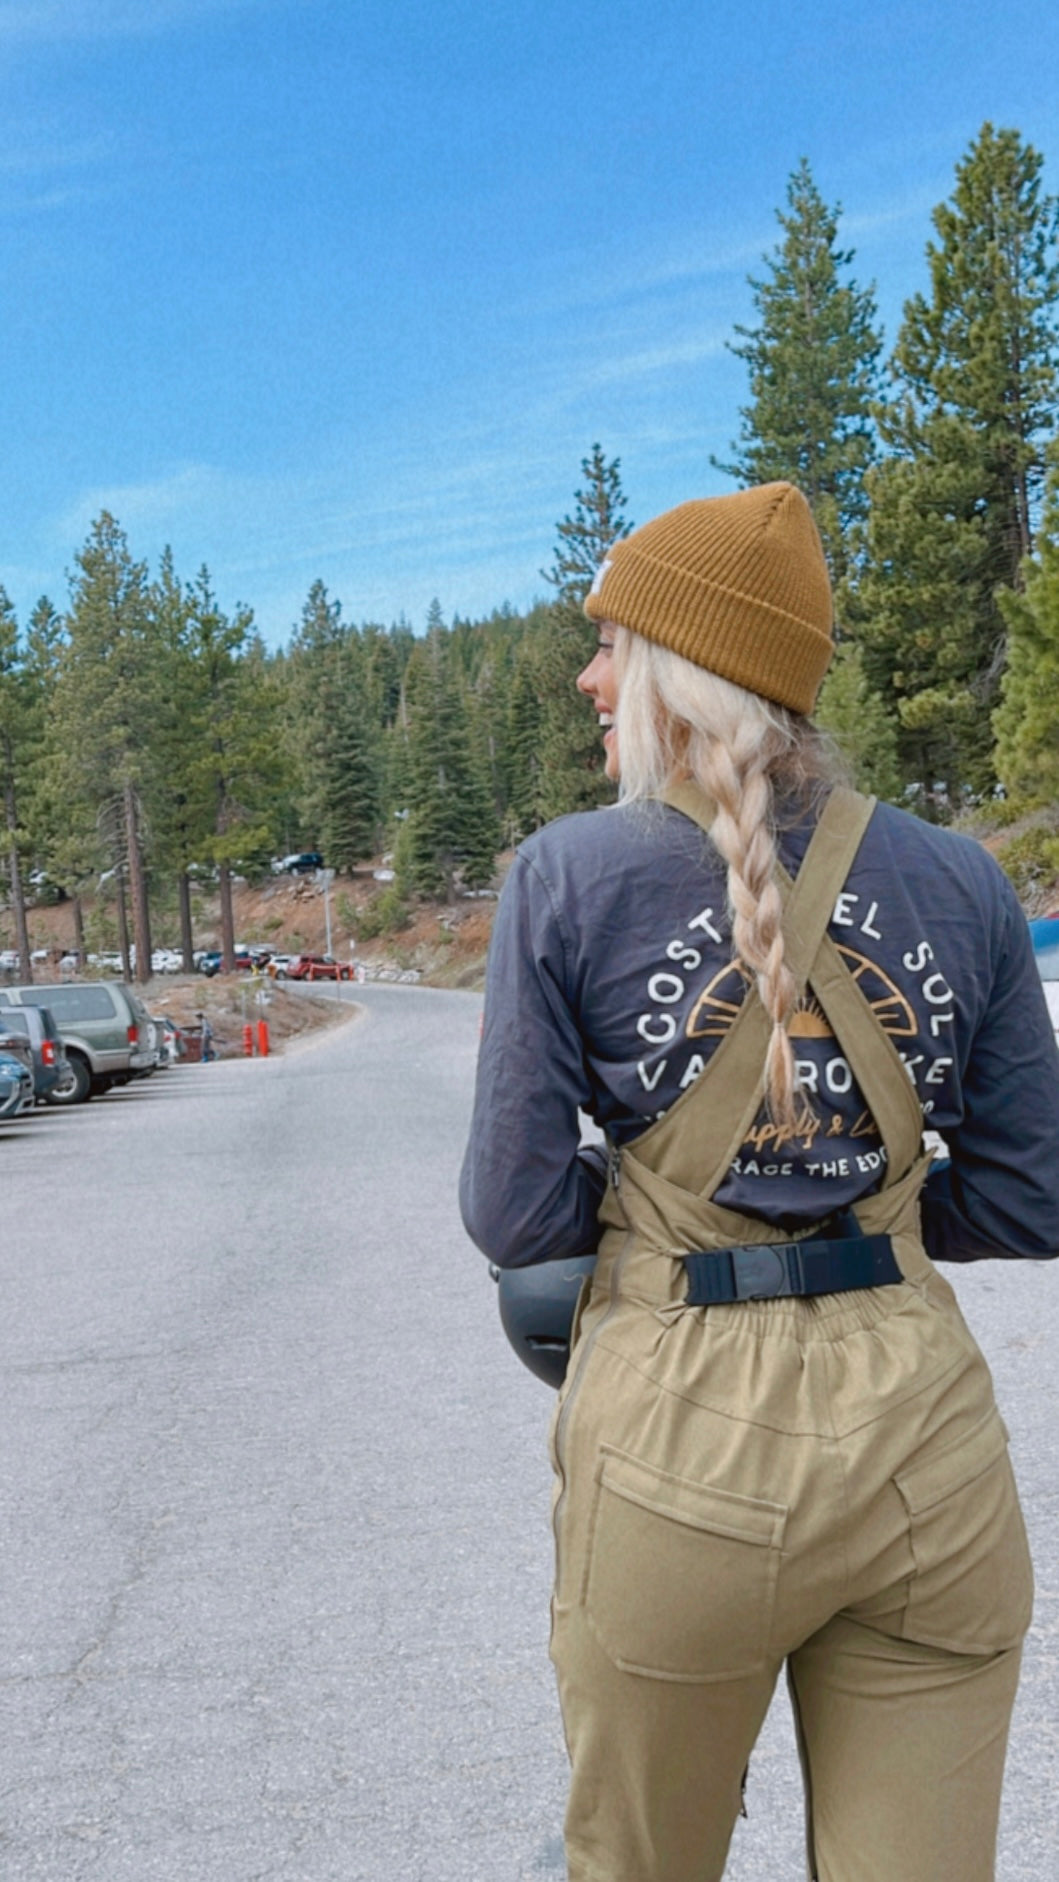 Snowboard girl walking to ride at mountain in california